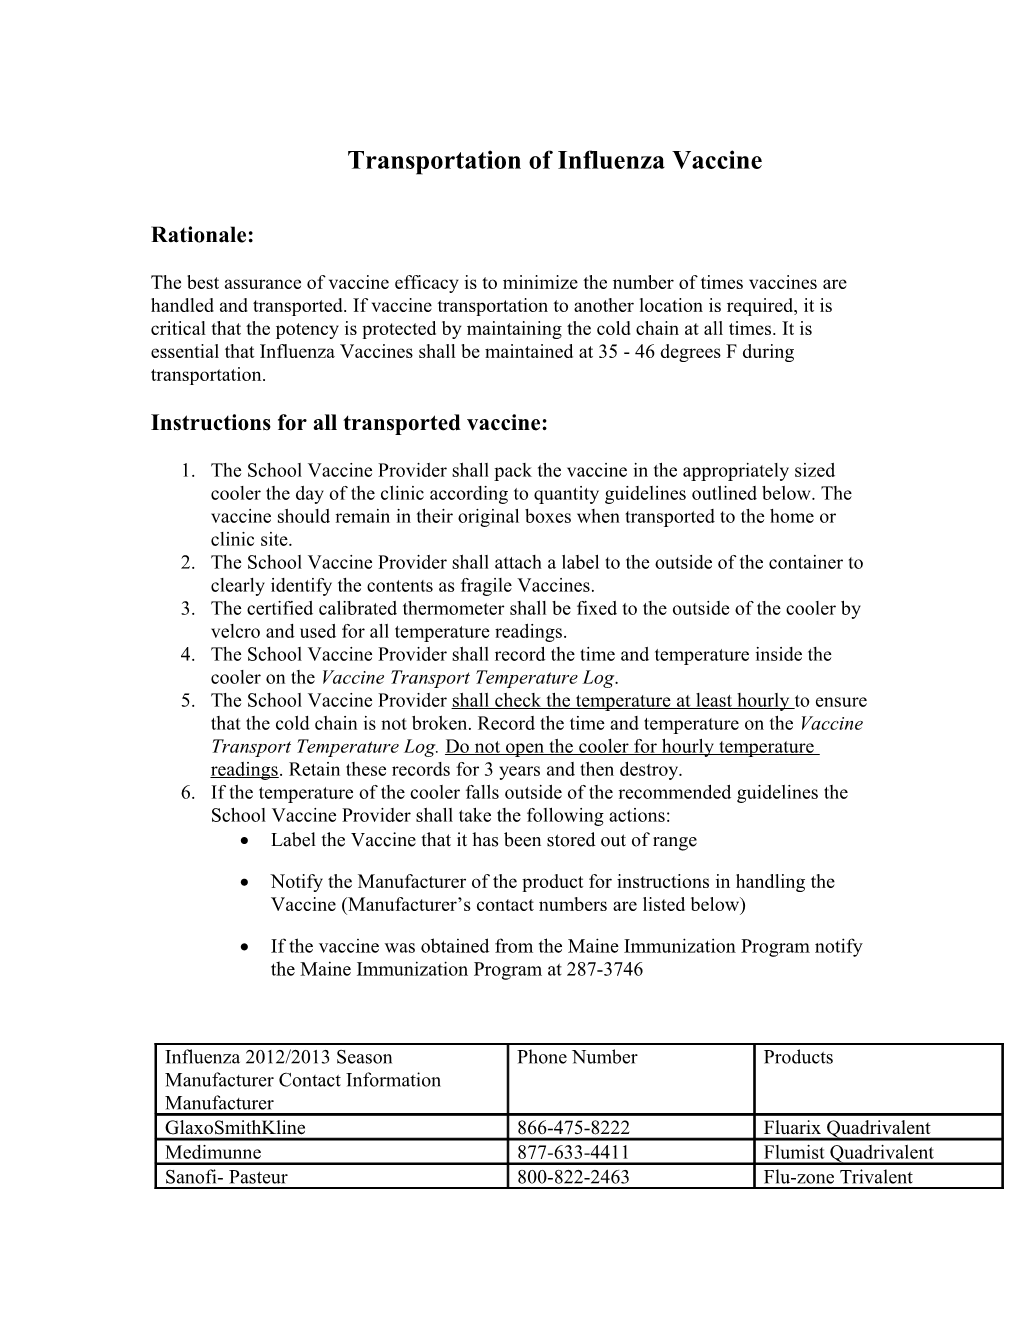 Transportation of Small Quantities of Influenza Vaccine